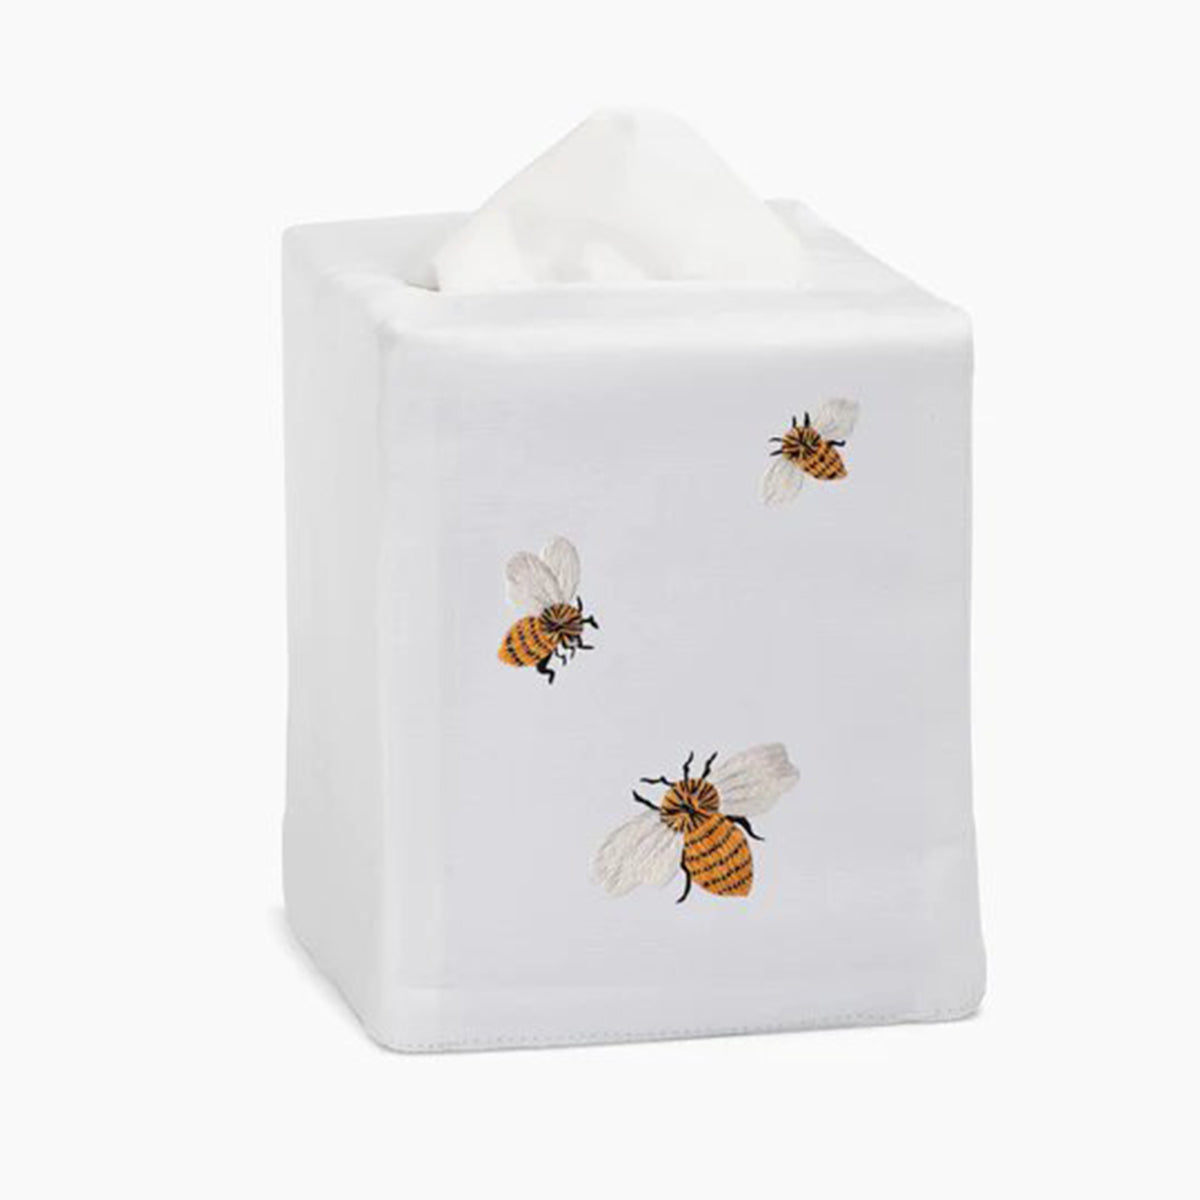 Henry Handwork Bees Tissue Box Cover